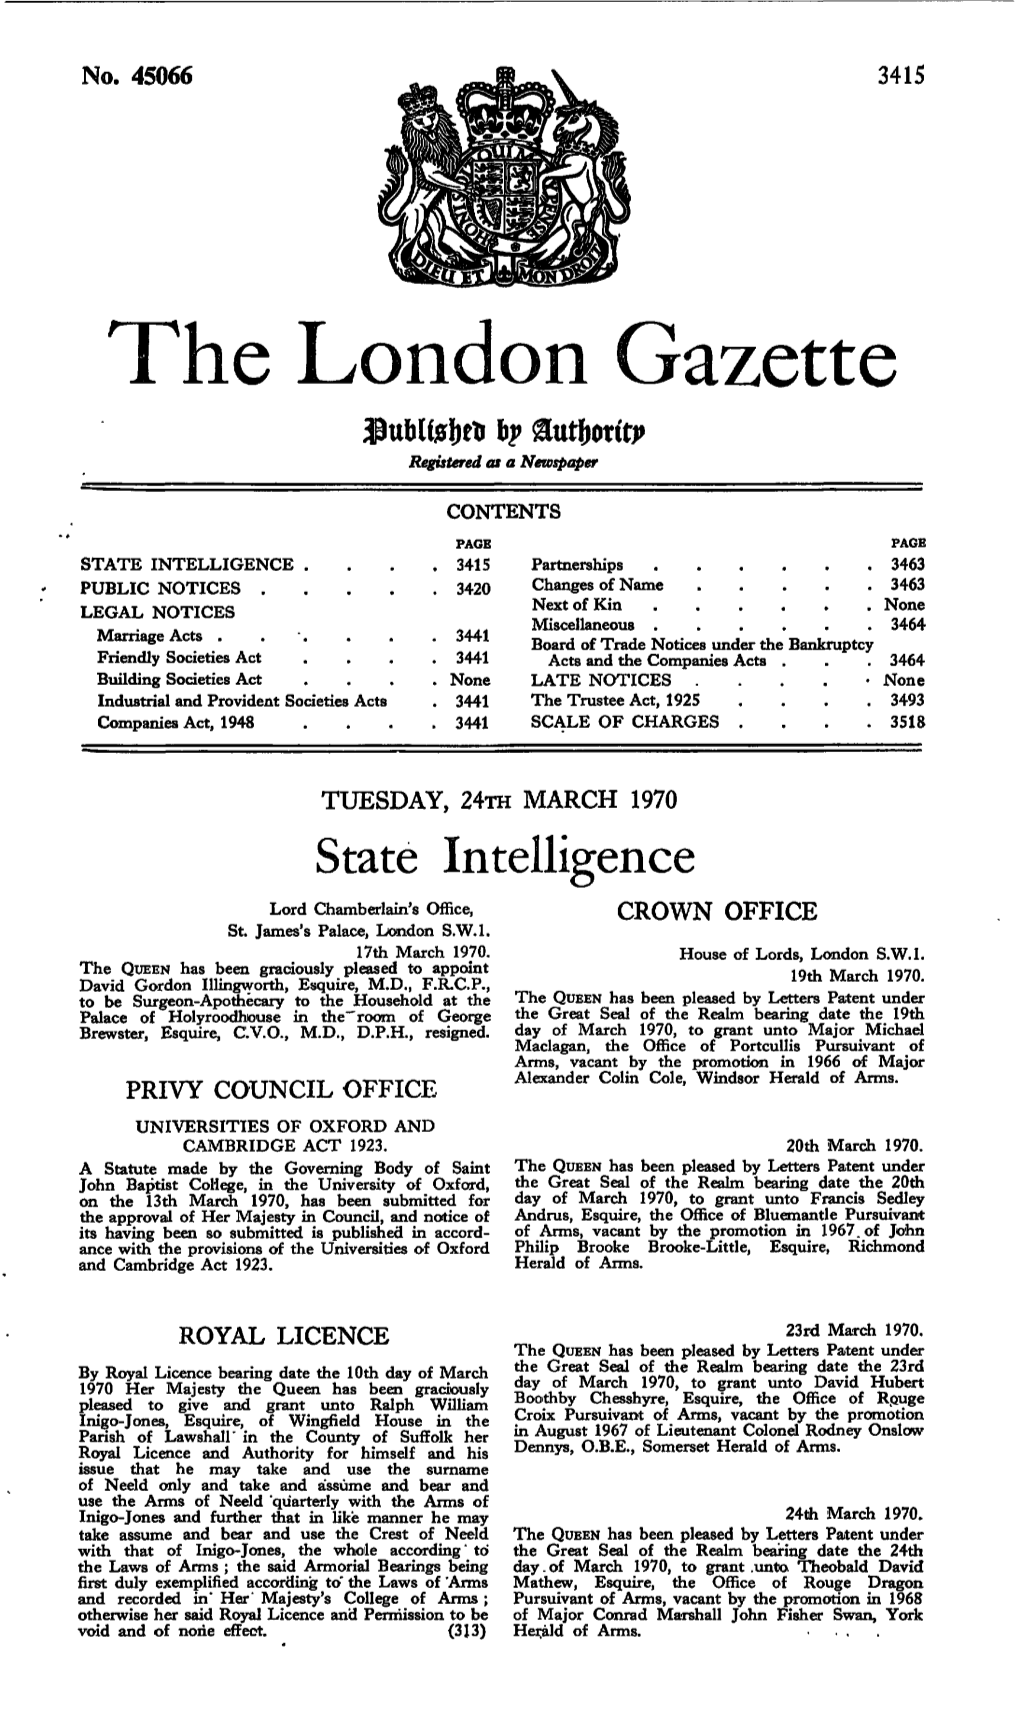 The London Gazette 6? Registered at a Newspaper